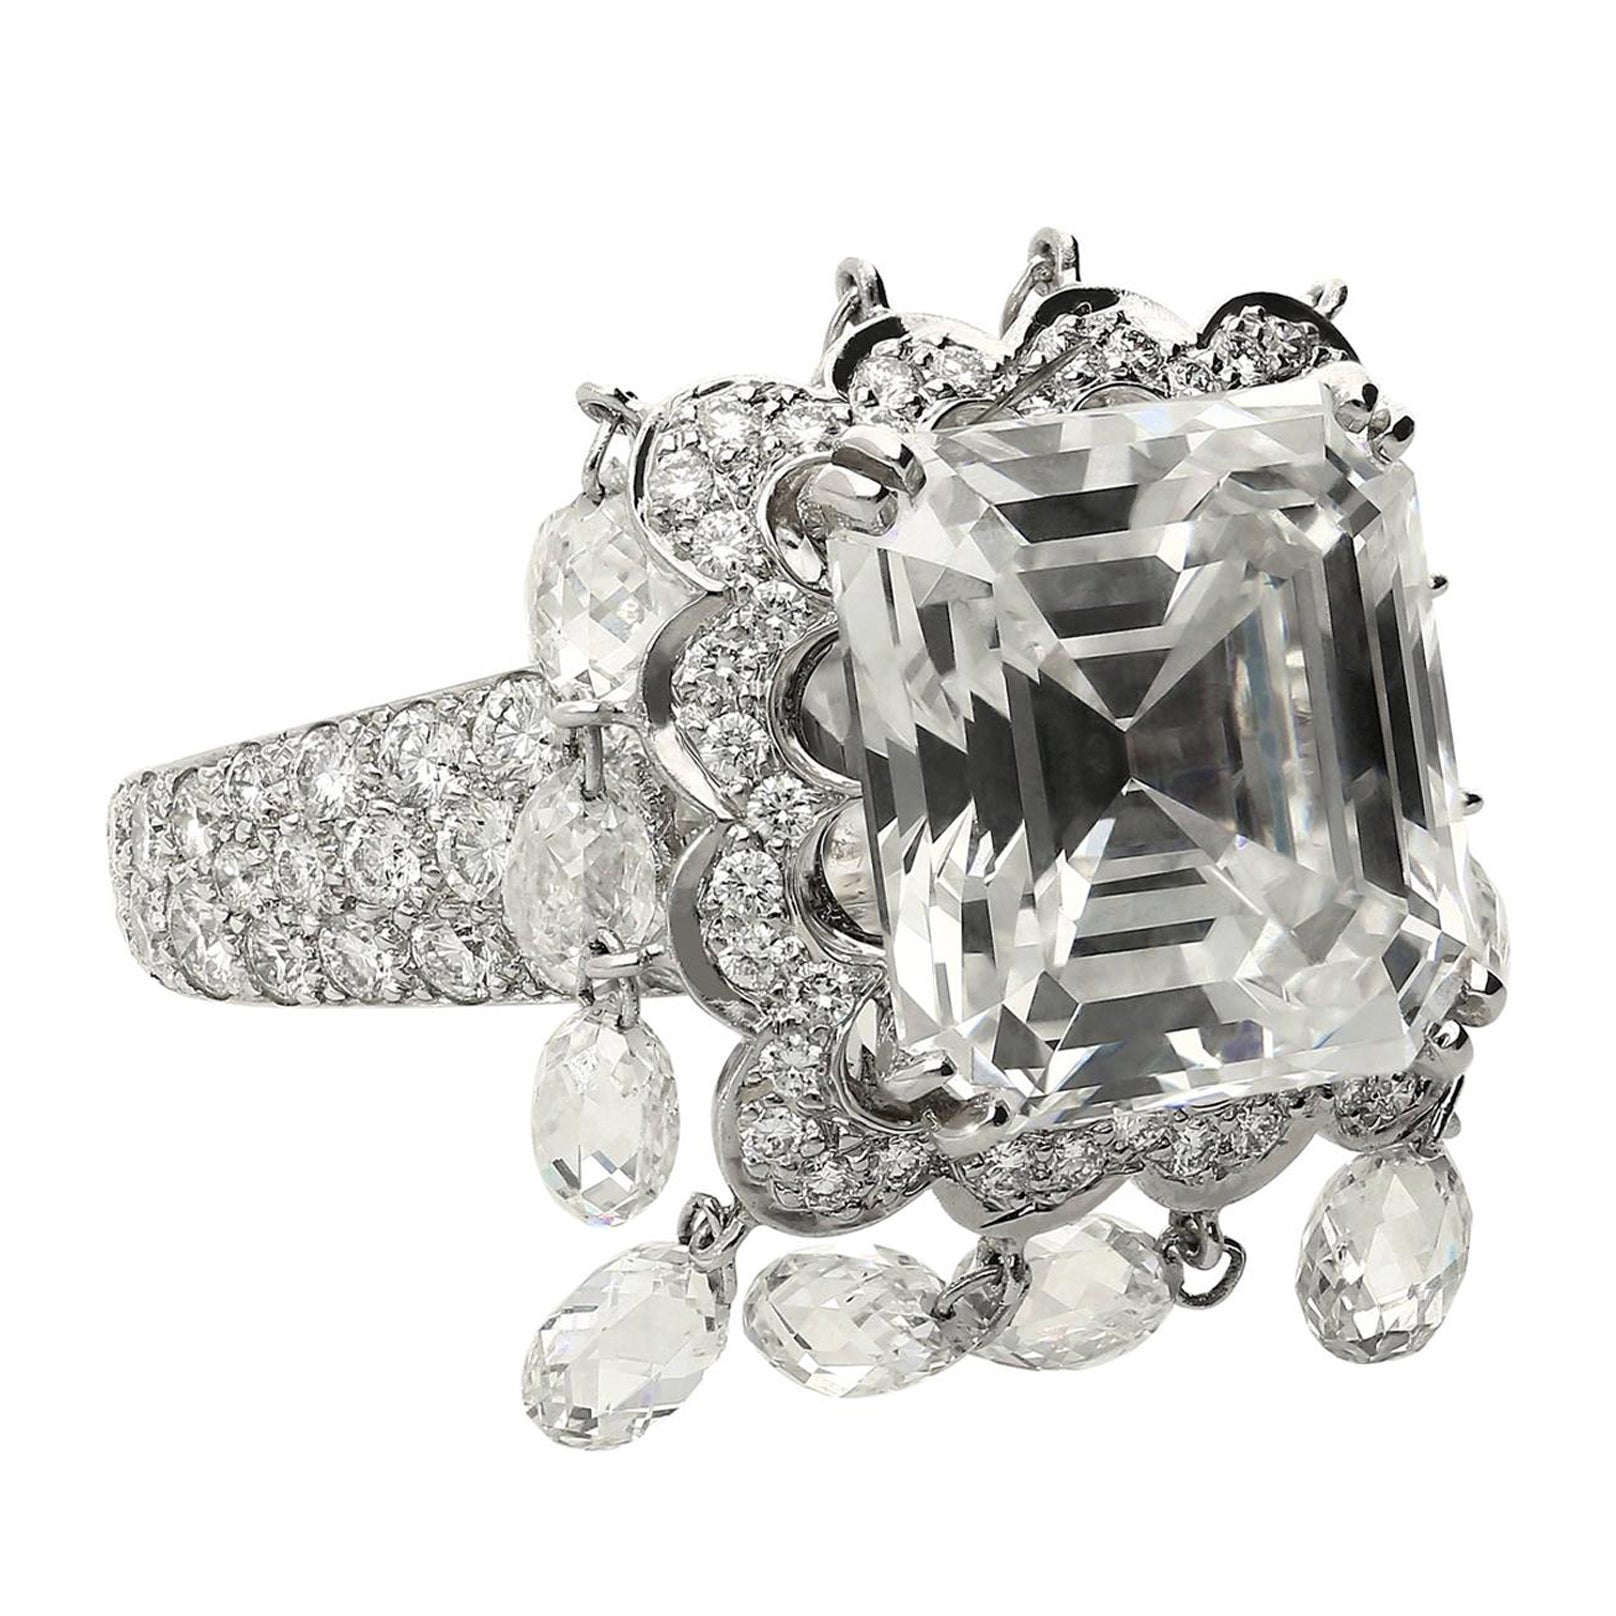 Boucheron "Laperouse" 8.03 Carat Emerald Cut G VS1 GIA Certified Diamond Ring